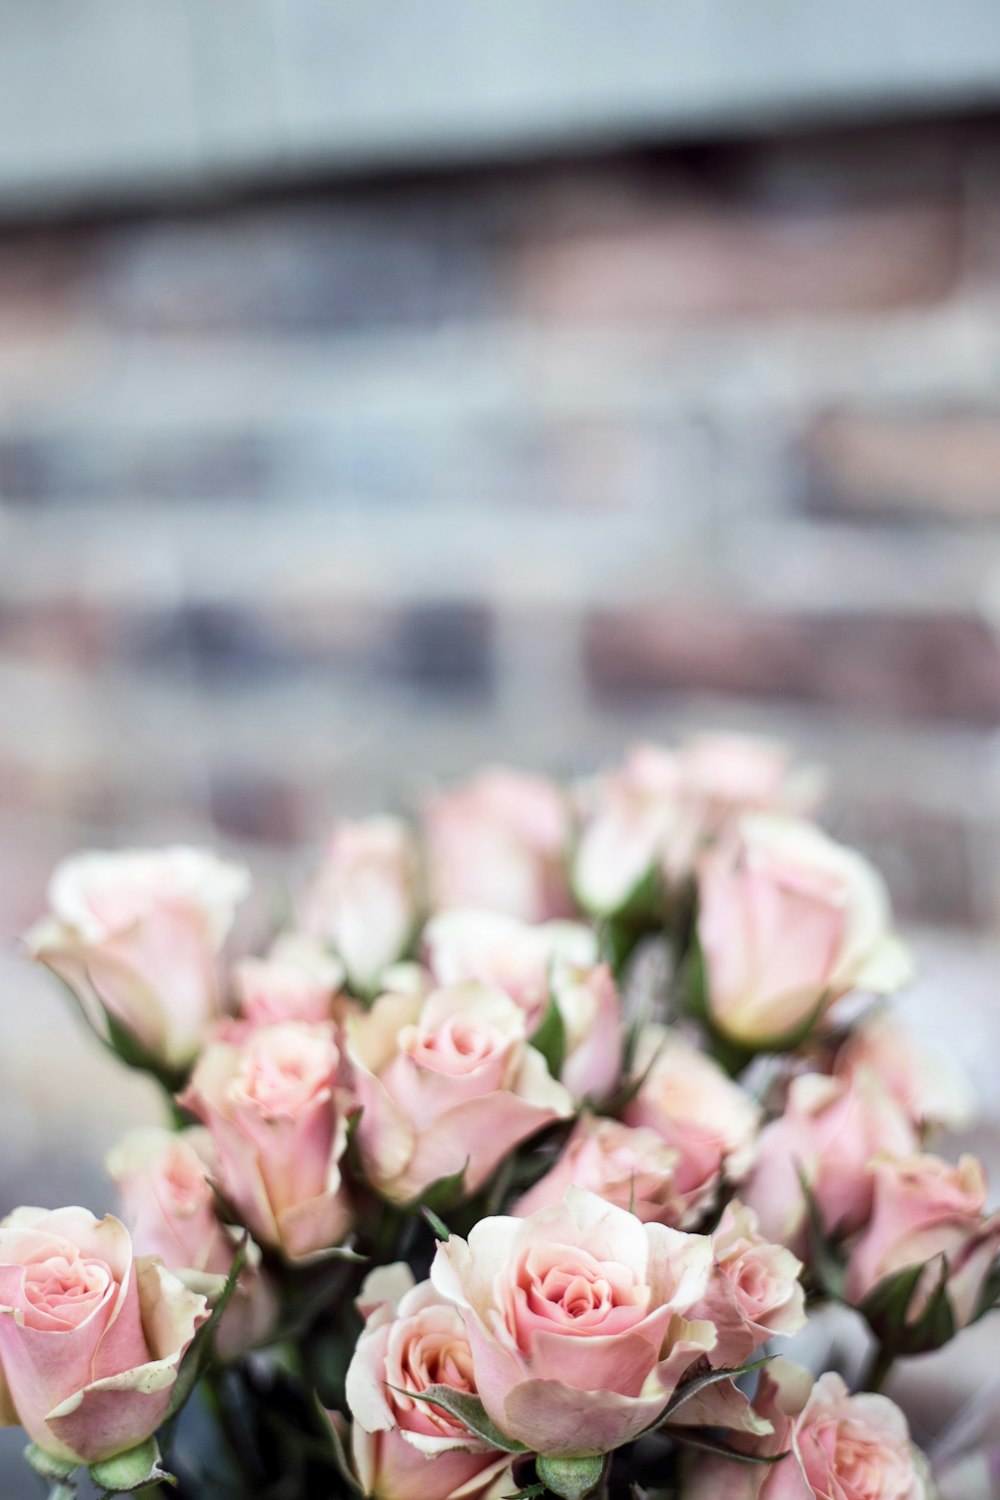 Selektive Fokusfotografie von rosa Rosenblüten